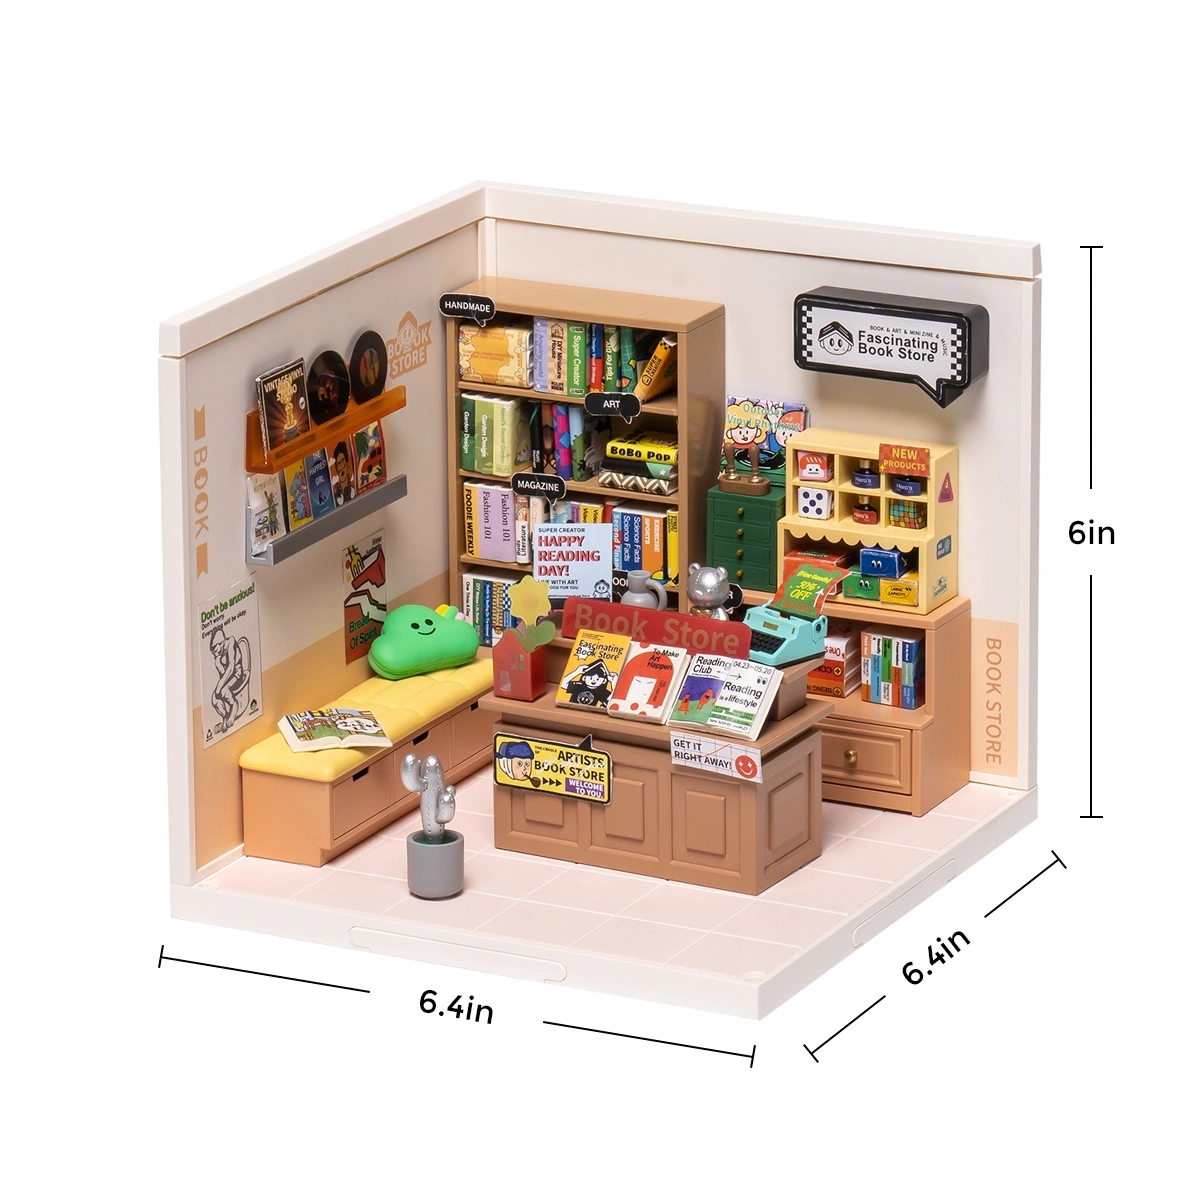 Rolife Plastic Miniature House - Fascinating Book Store DW004